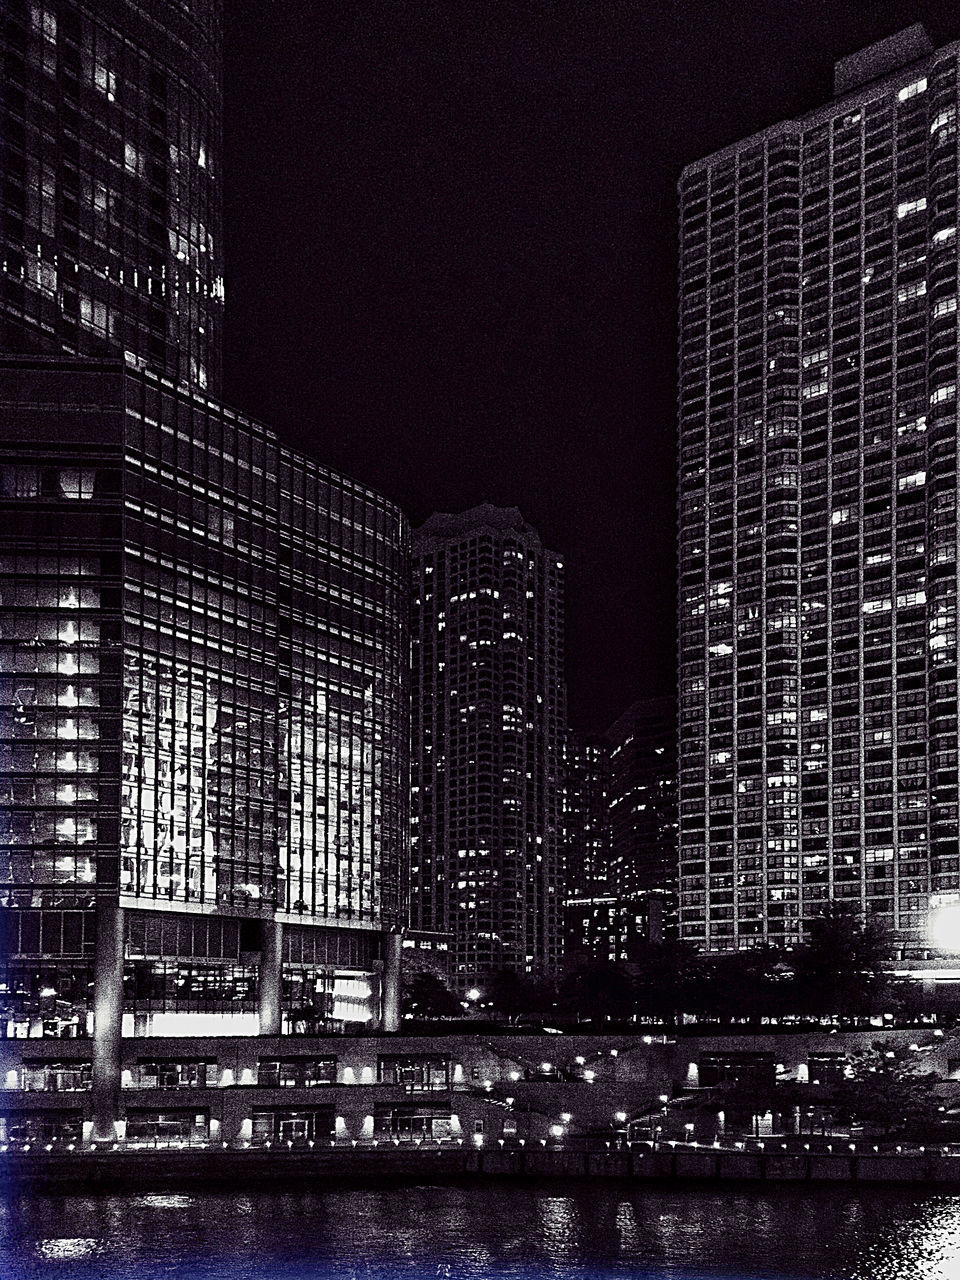 ILLUMINATED BUILDINGS AGAINST SKY AT NIGHT